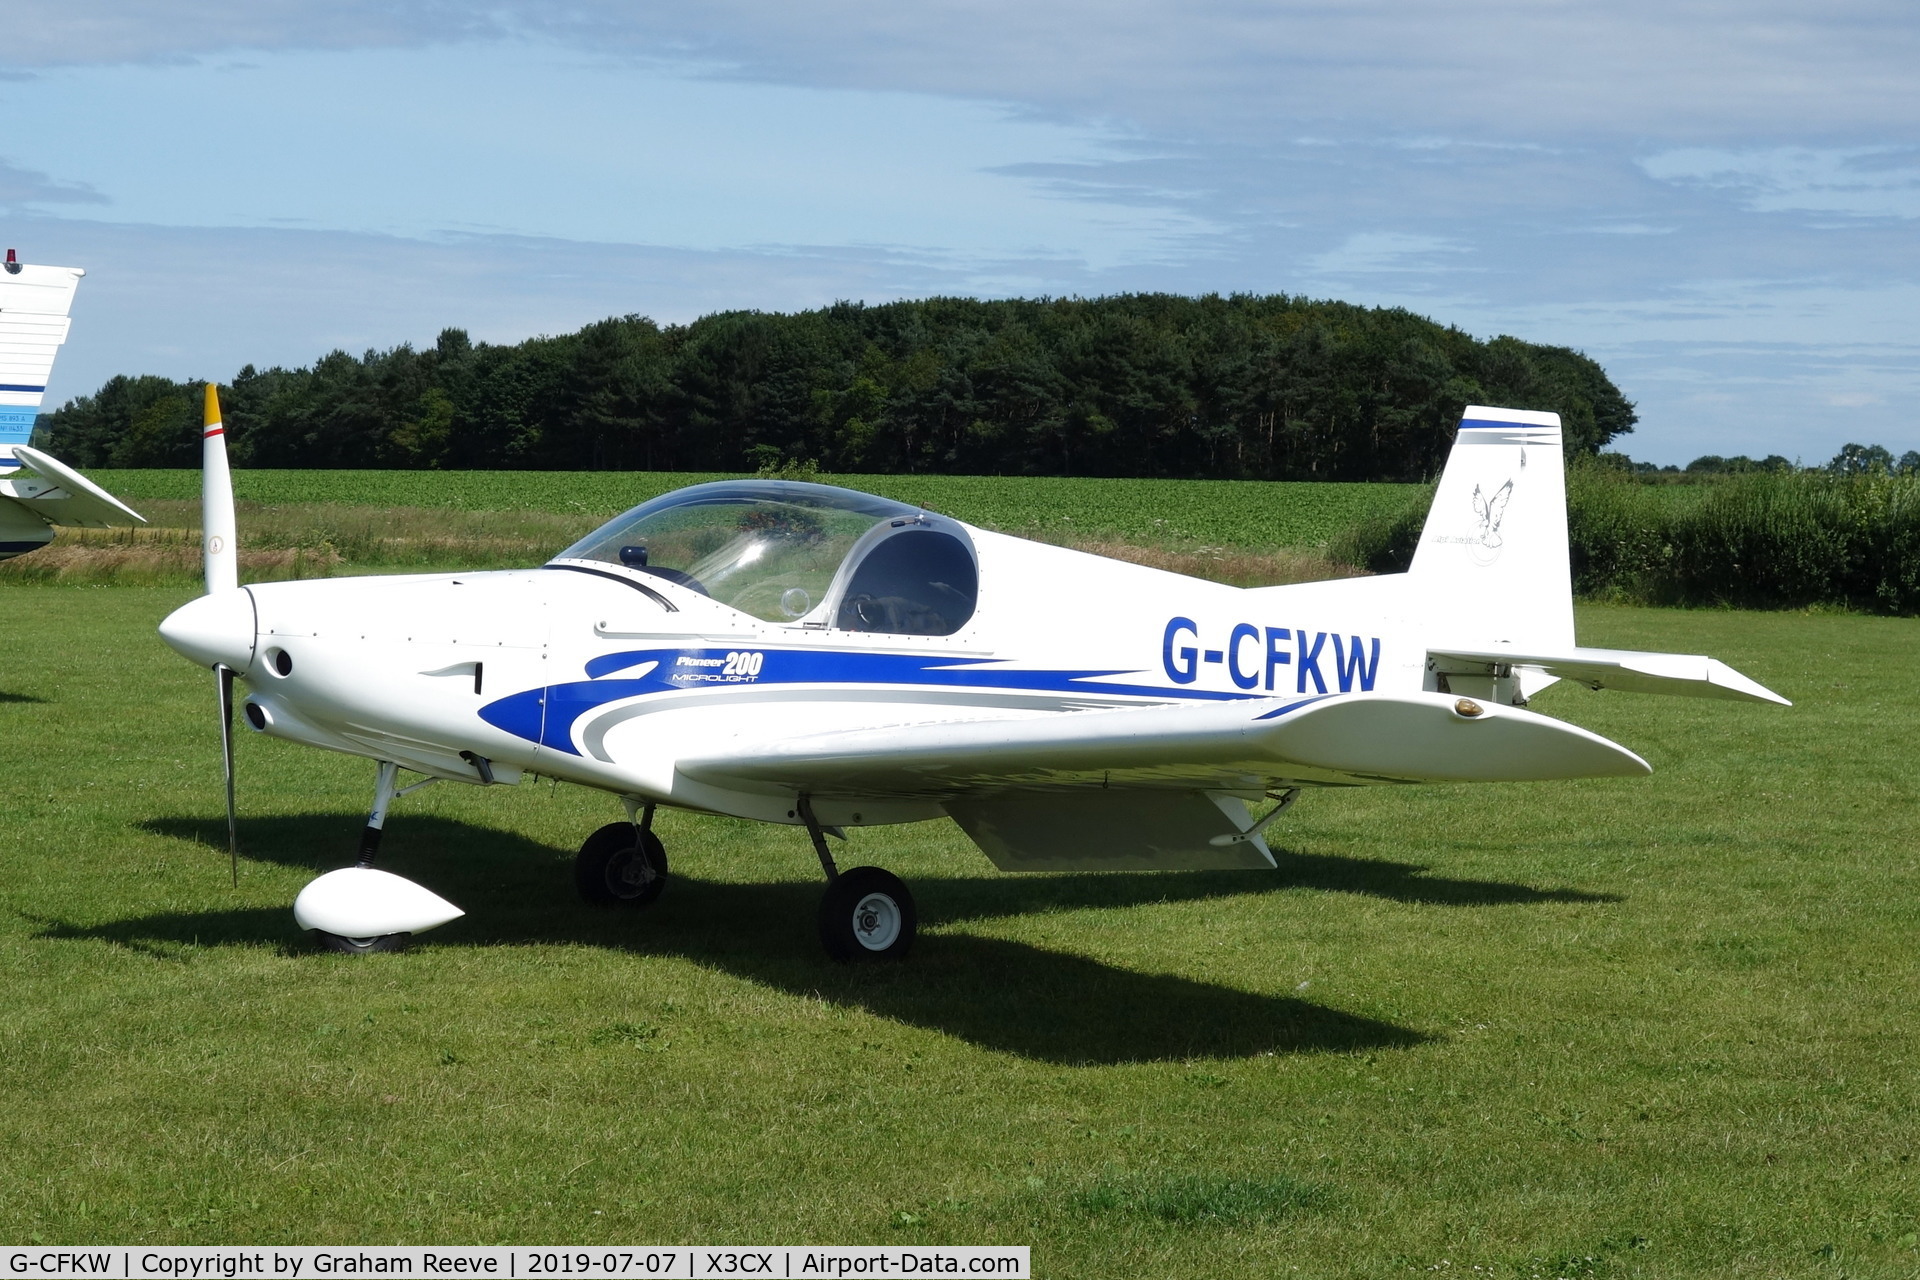 G-CFKW, 2008 Alpi Aviation Pioneer 200-M C/N LAA 334-14828, Parked at Northrepps.